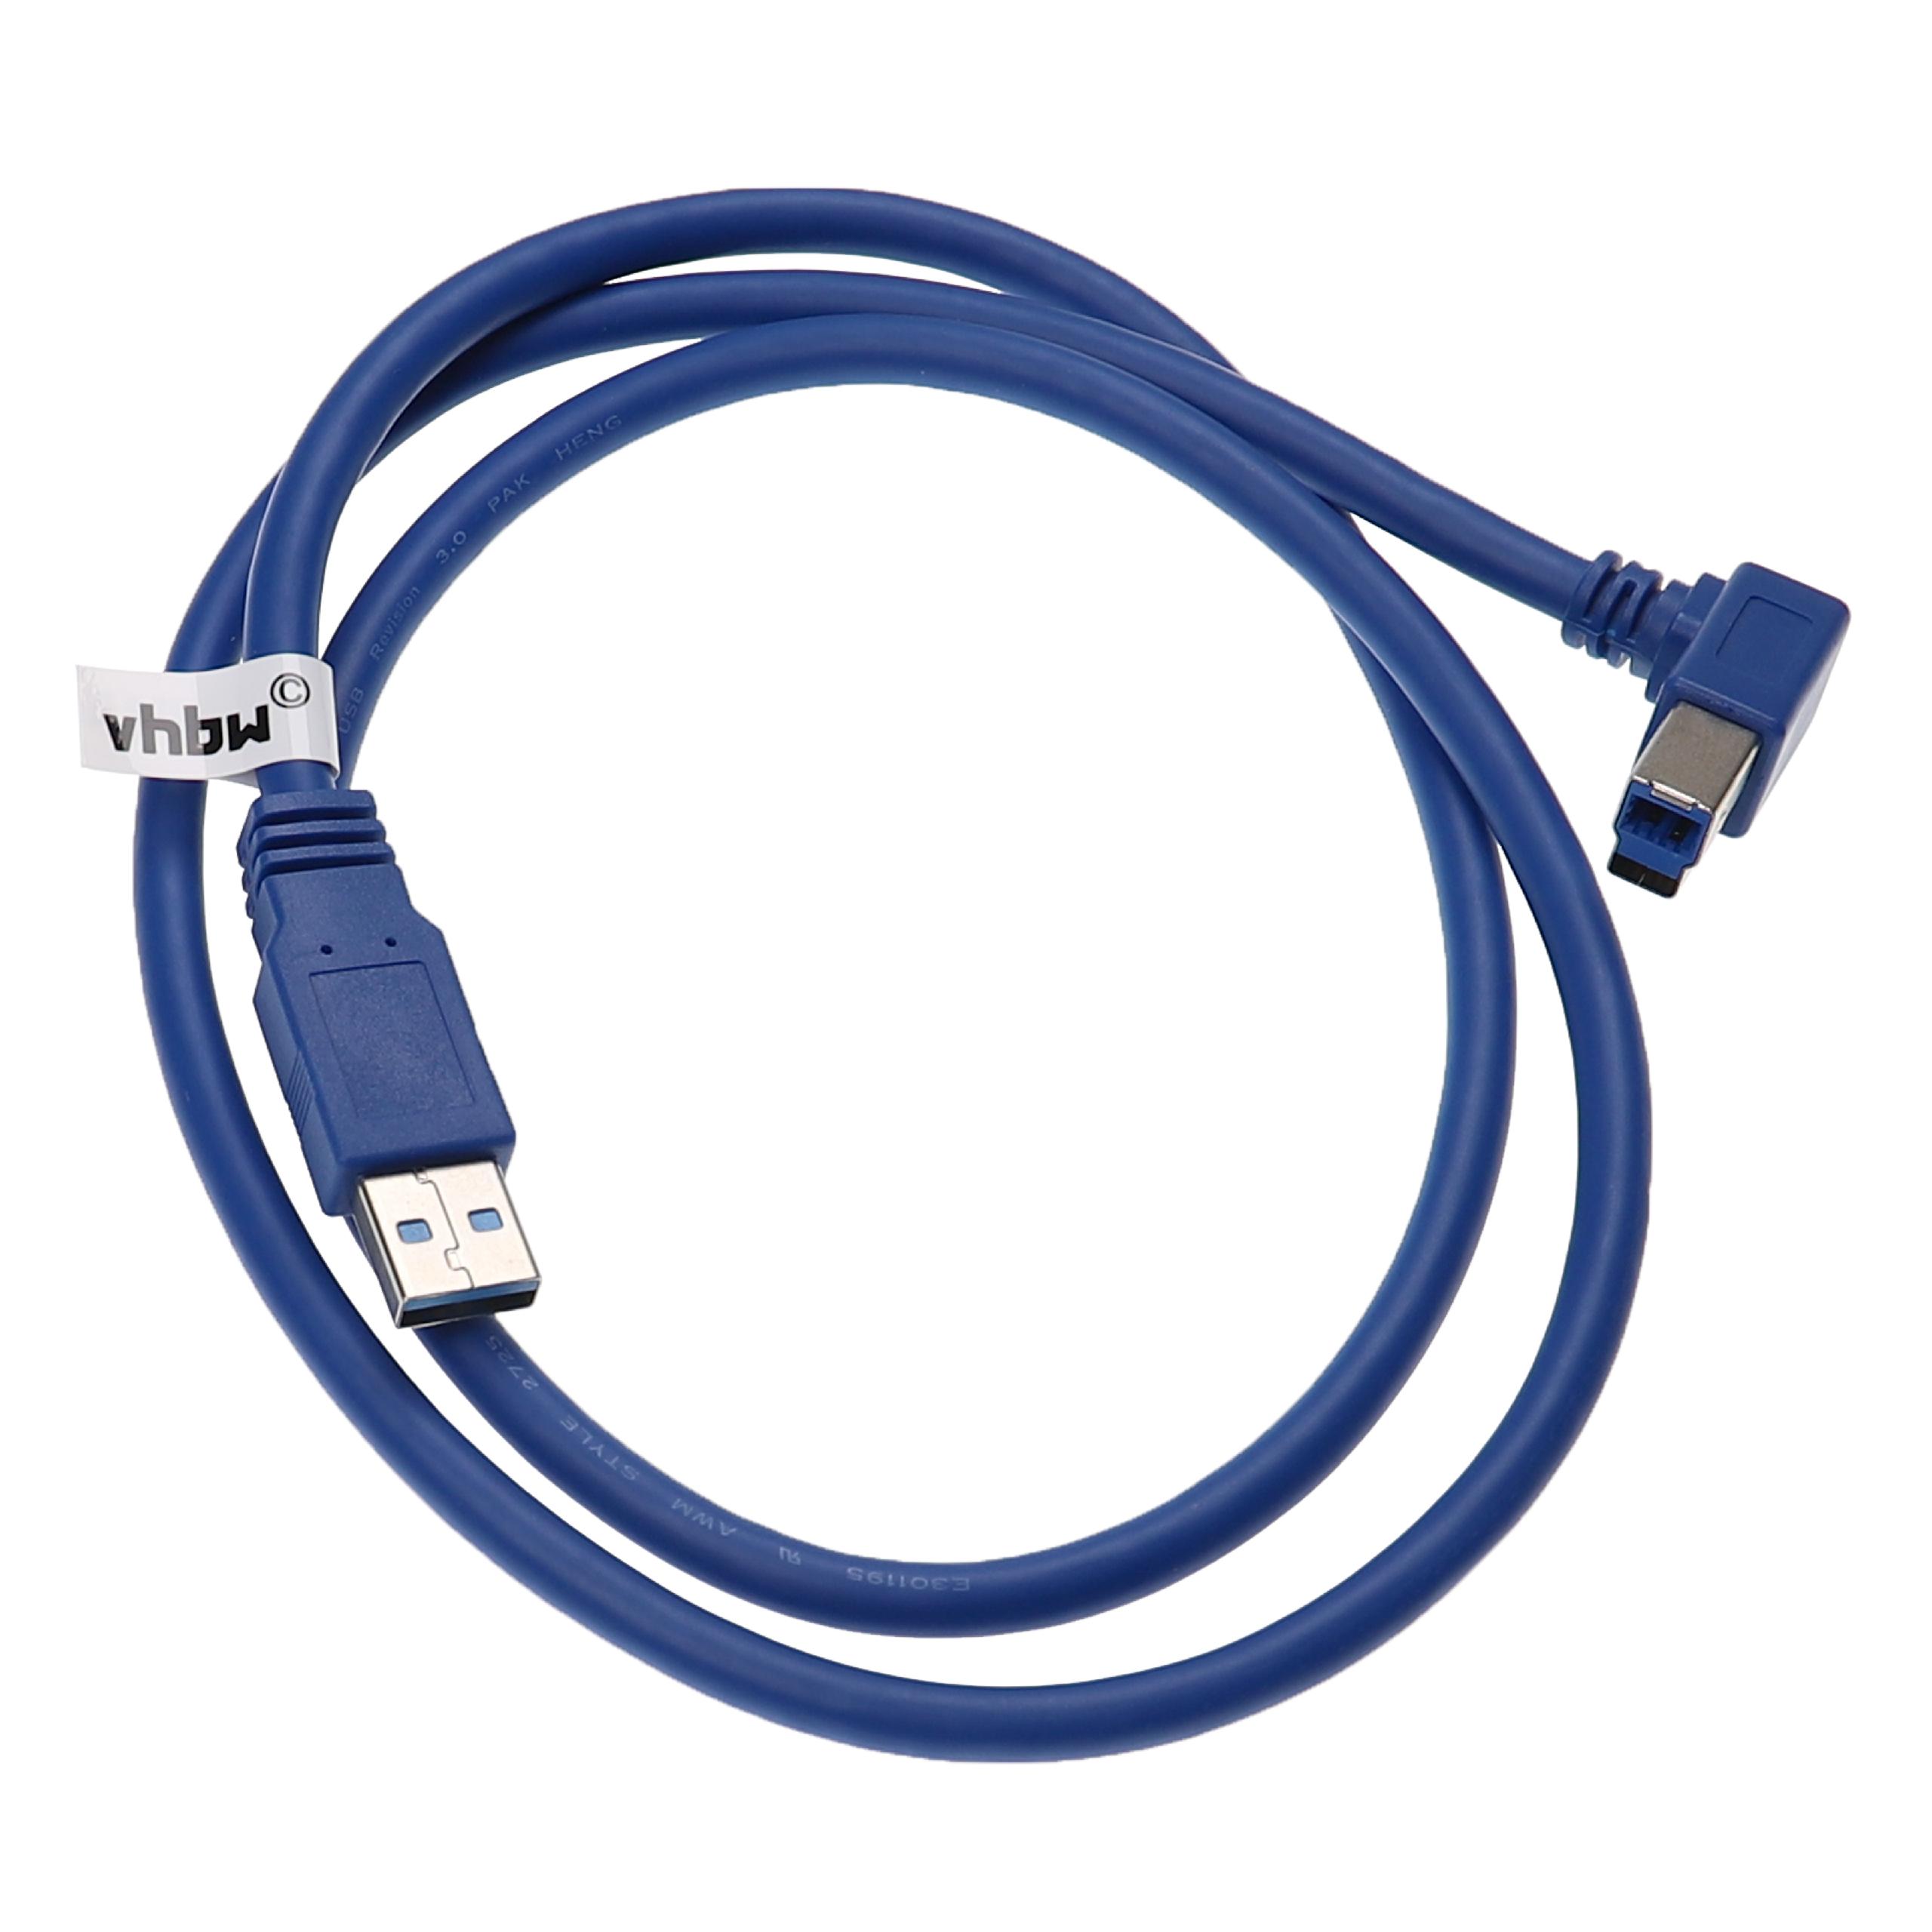 USB 3.0 Kabel Typ A auf Typ B - USB Datenkabel 1 m Blau